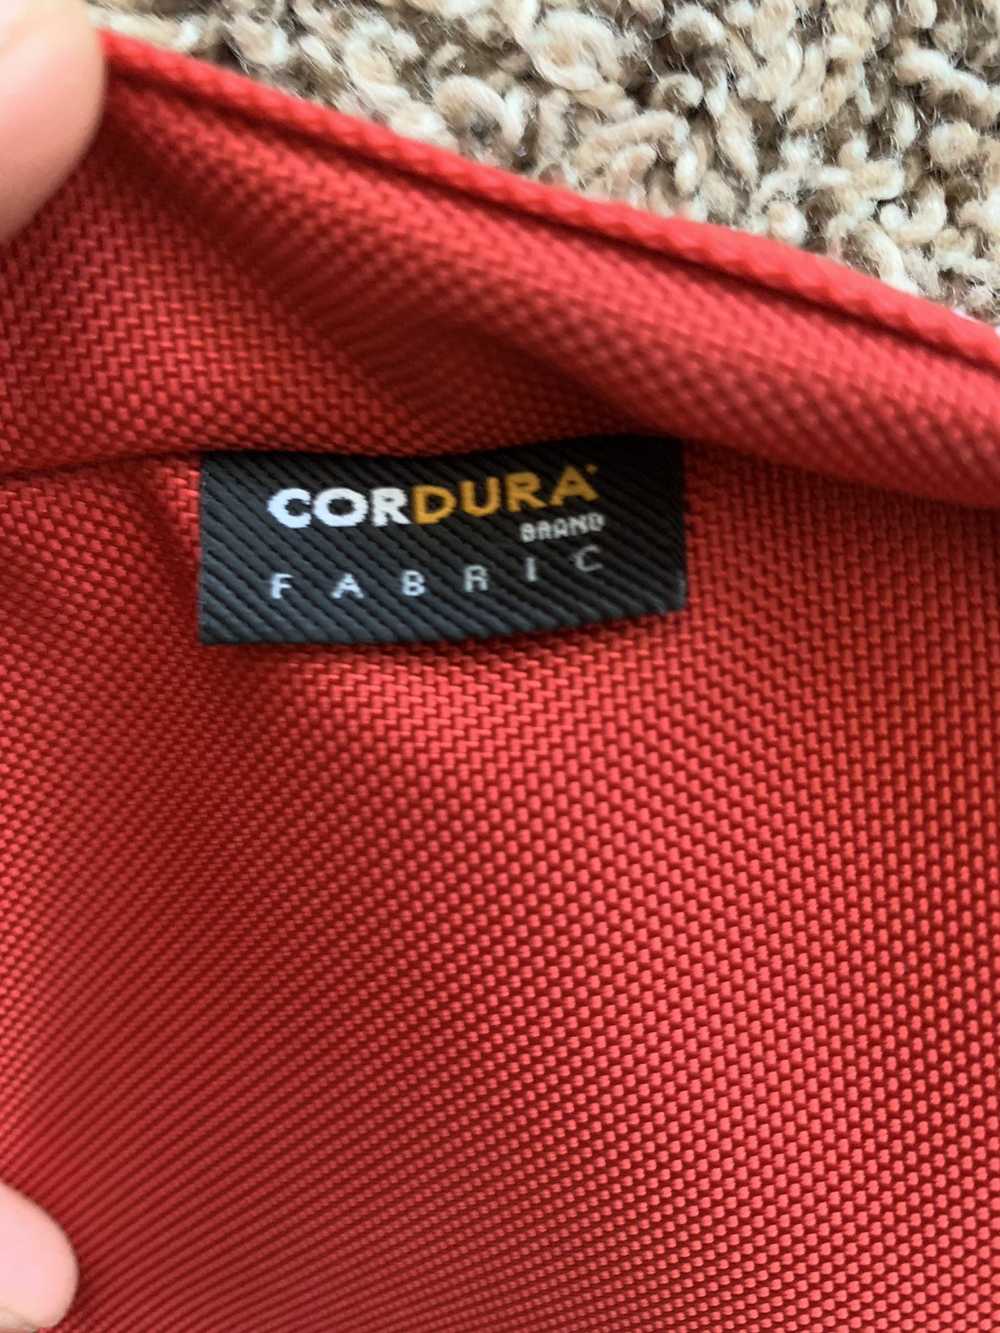 Supreme SS18 Red Shoulder Messenger Bag Cordura Fabric 100% Authentic DS